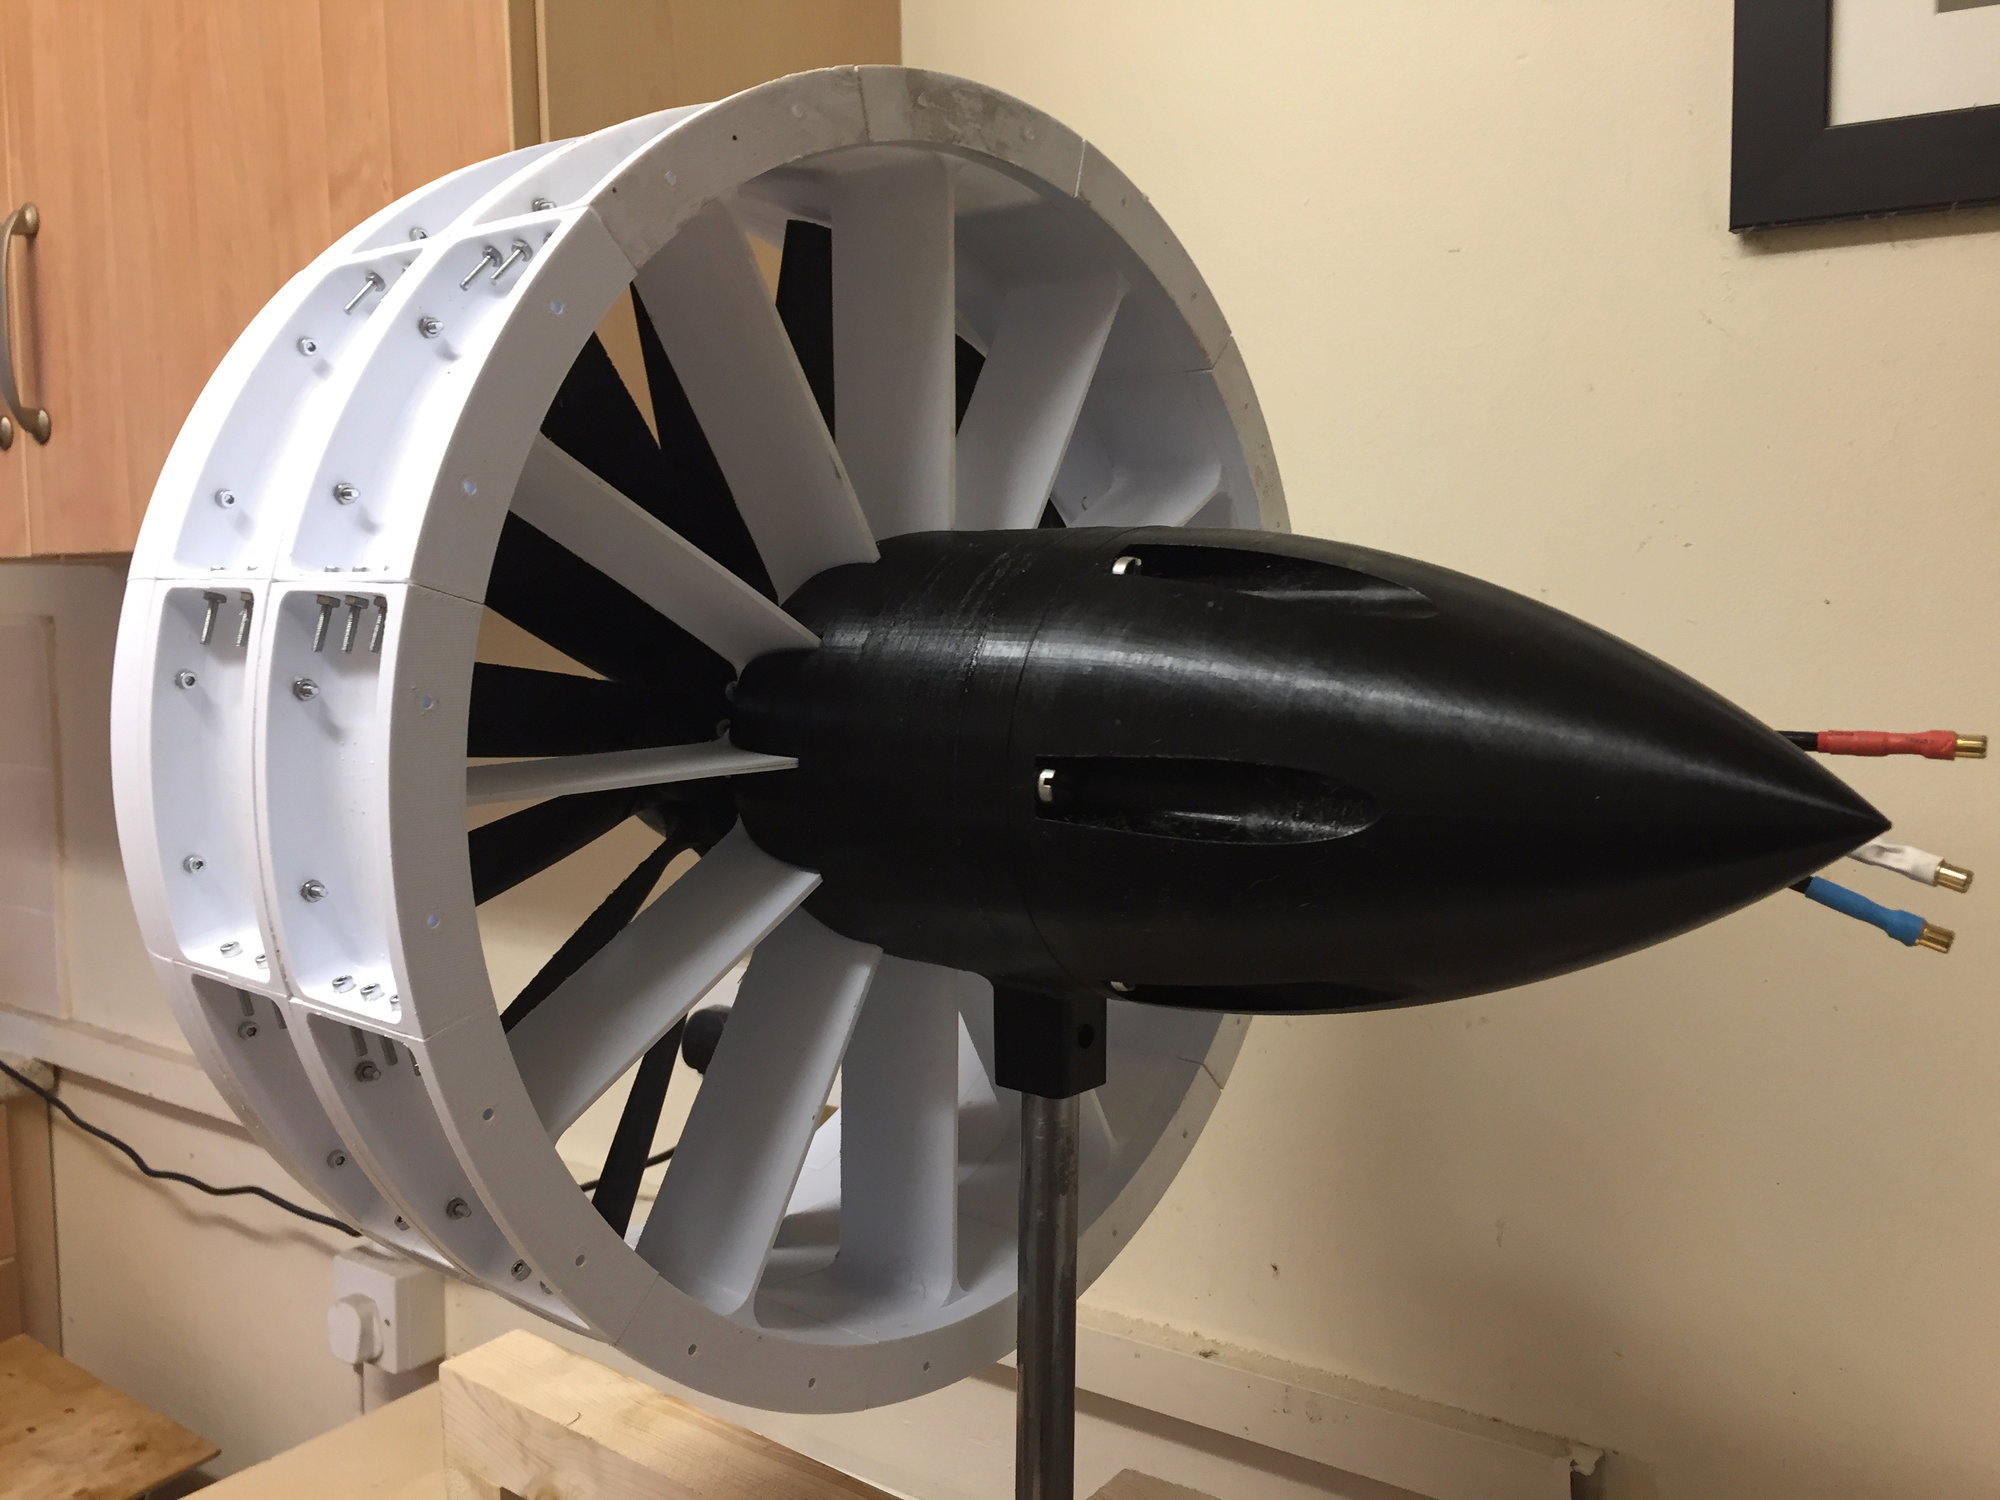 3D printed 400mm EDF project | Endless Sphere DIY EV Forum